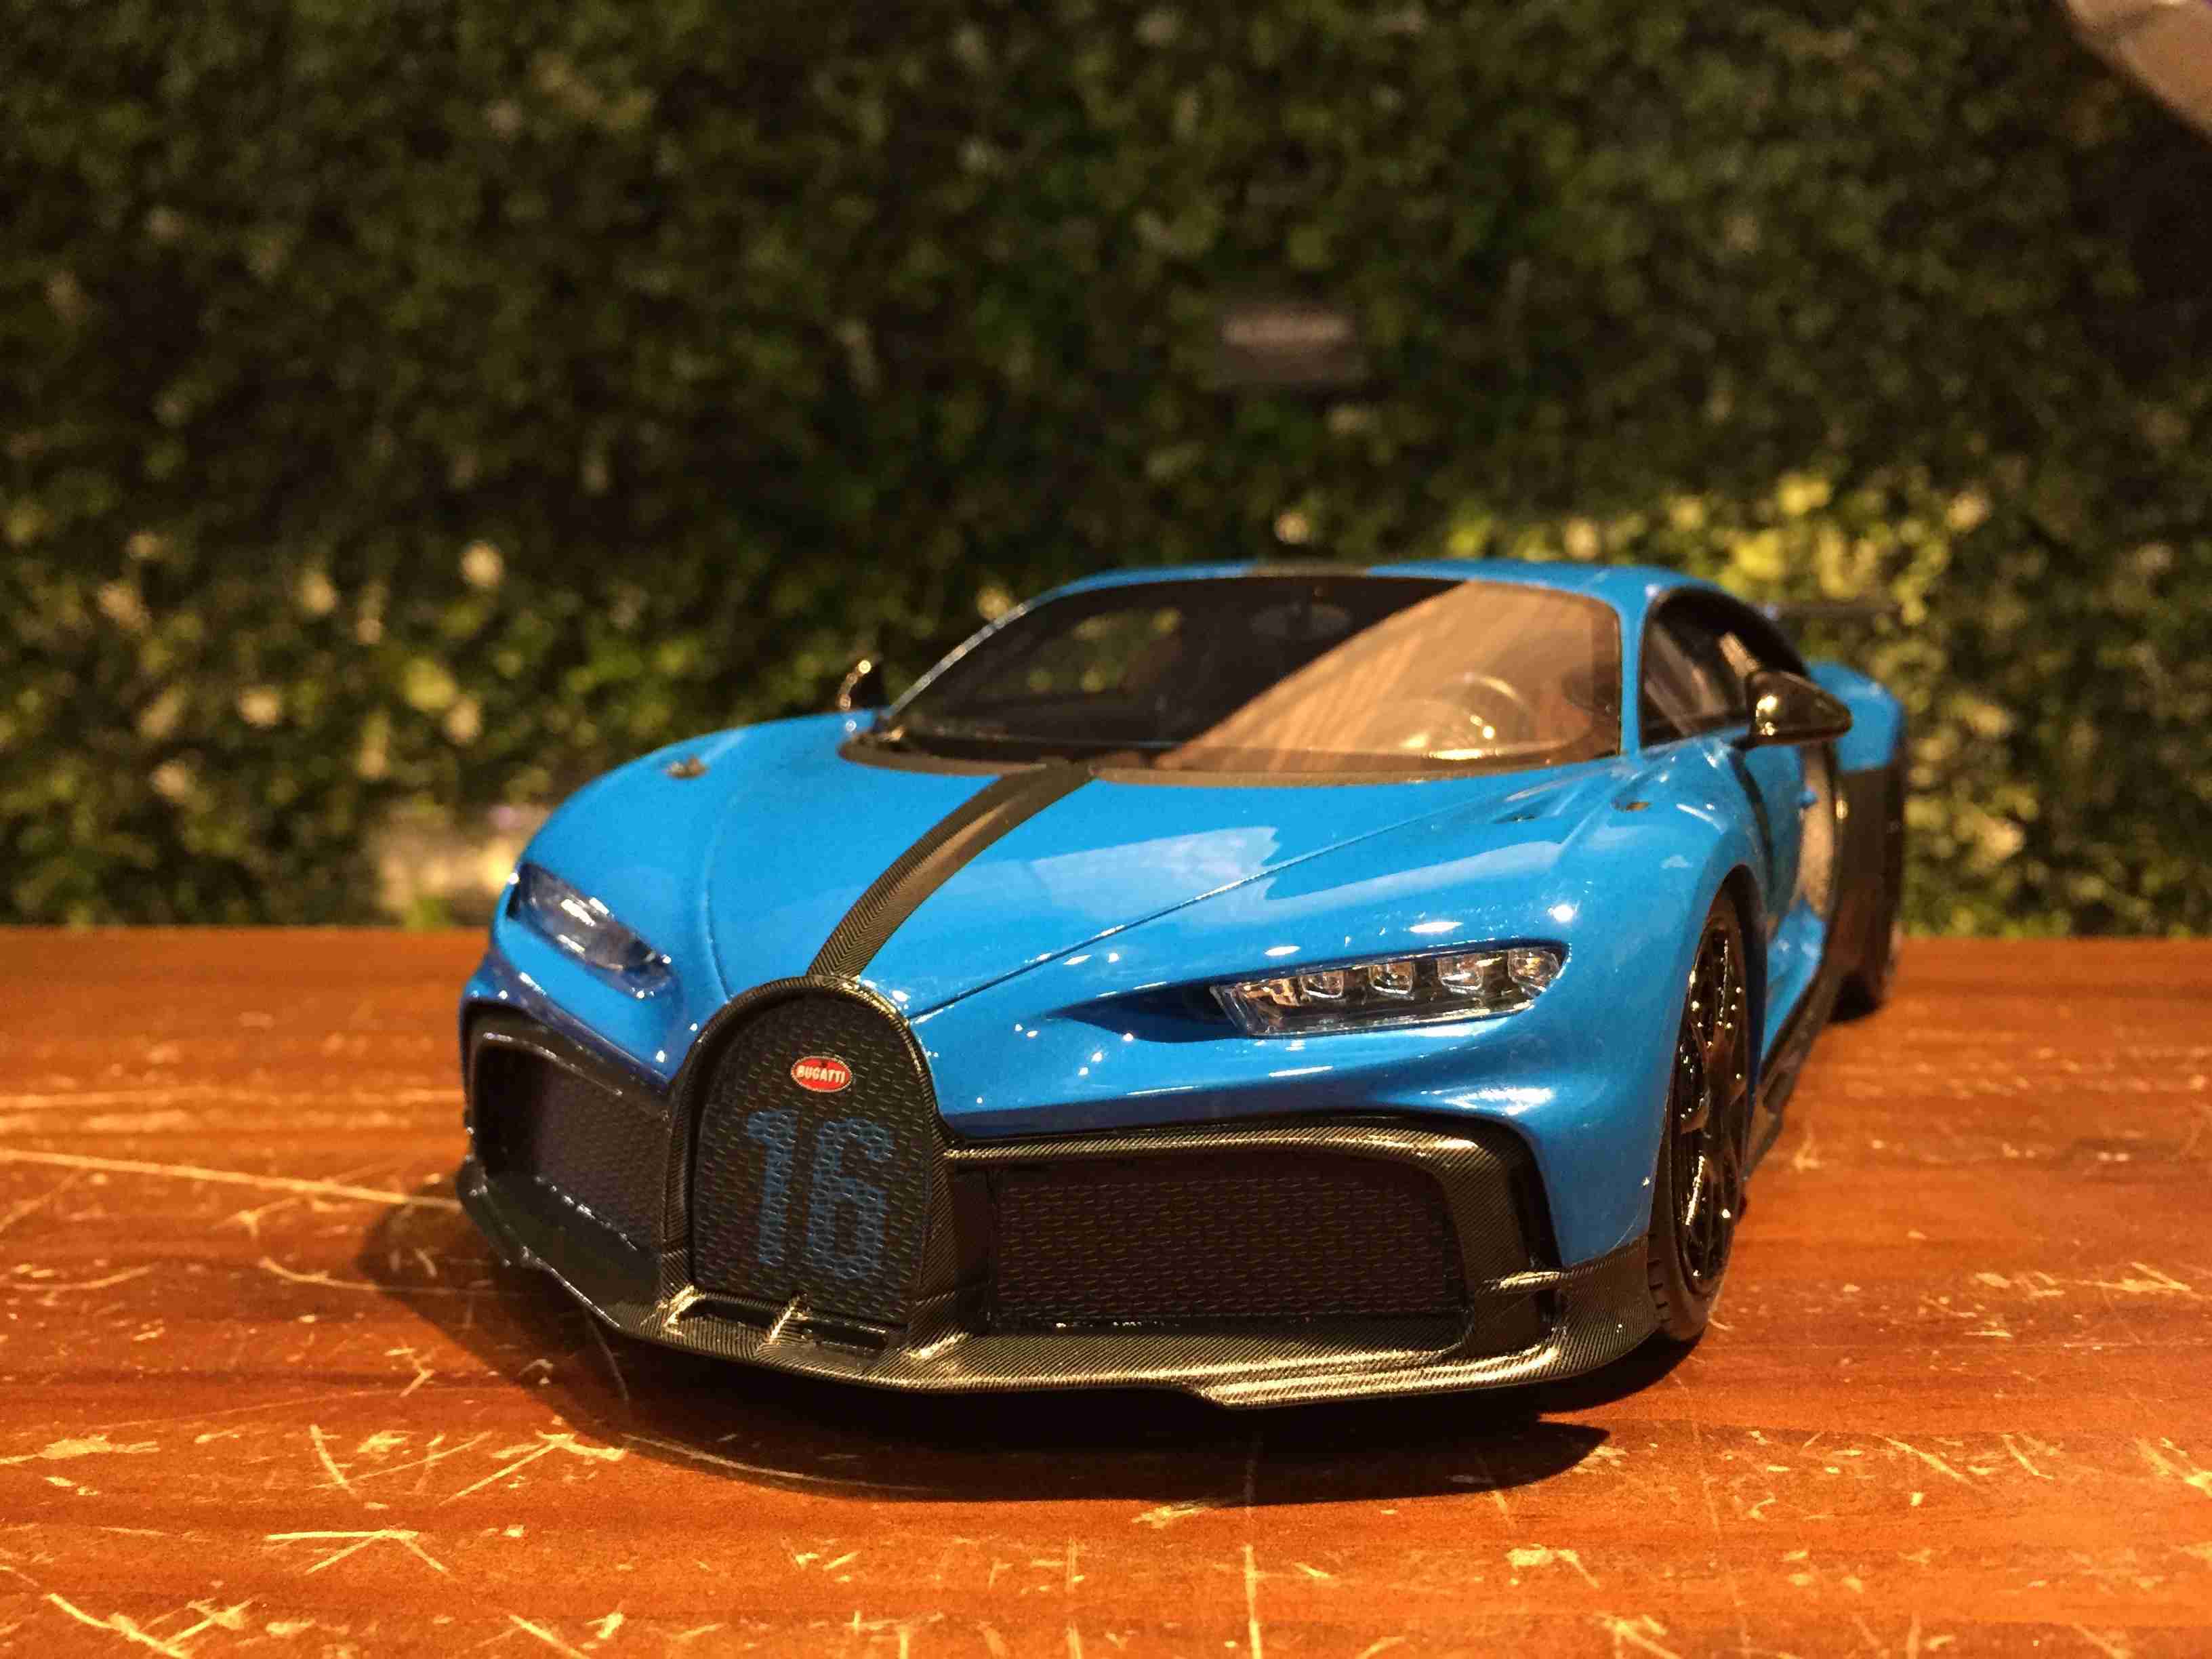 1/18 TopSpeed Bugatti Chiron Pur Sport Blue TS0373【MGM】